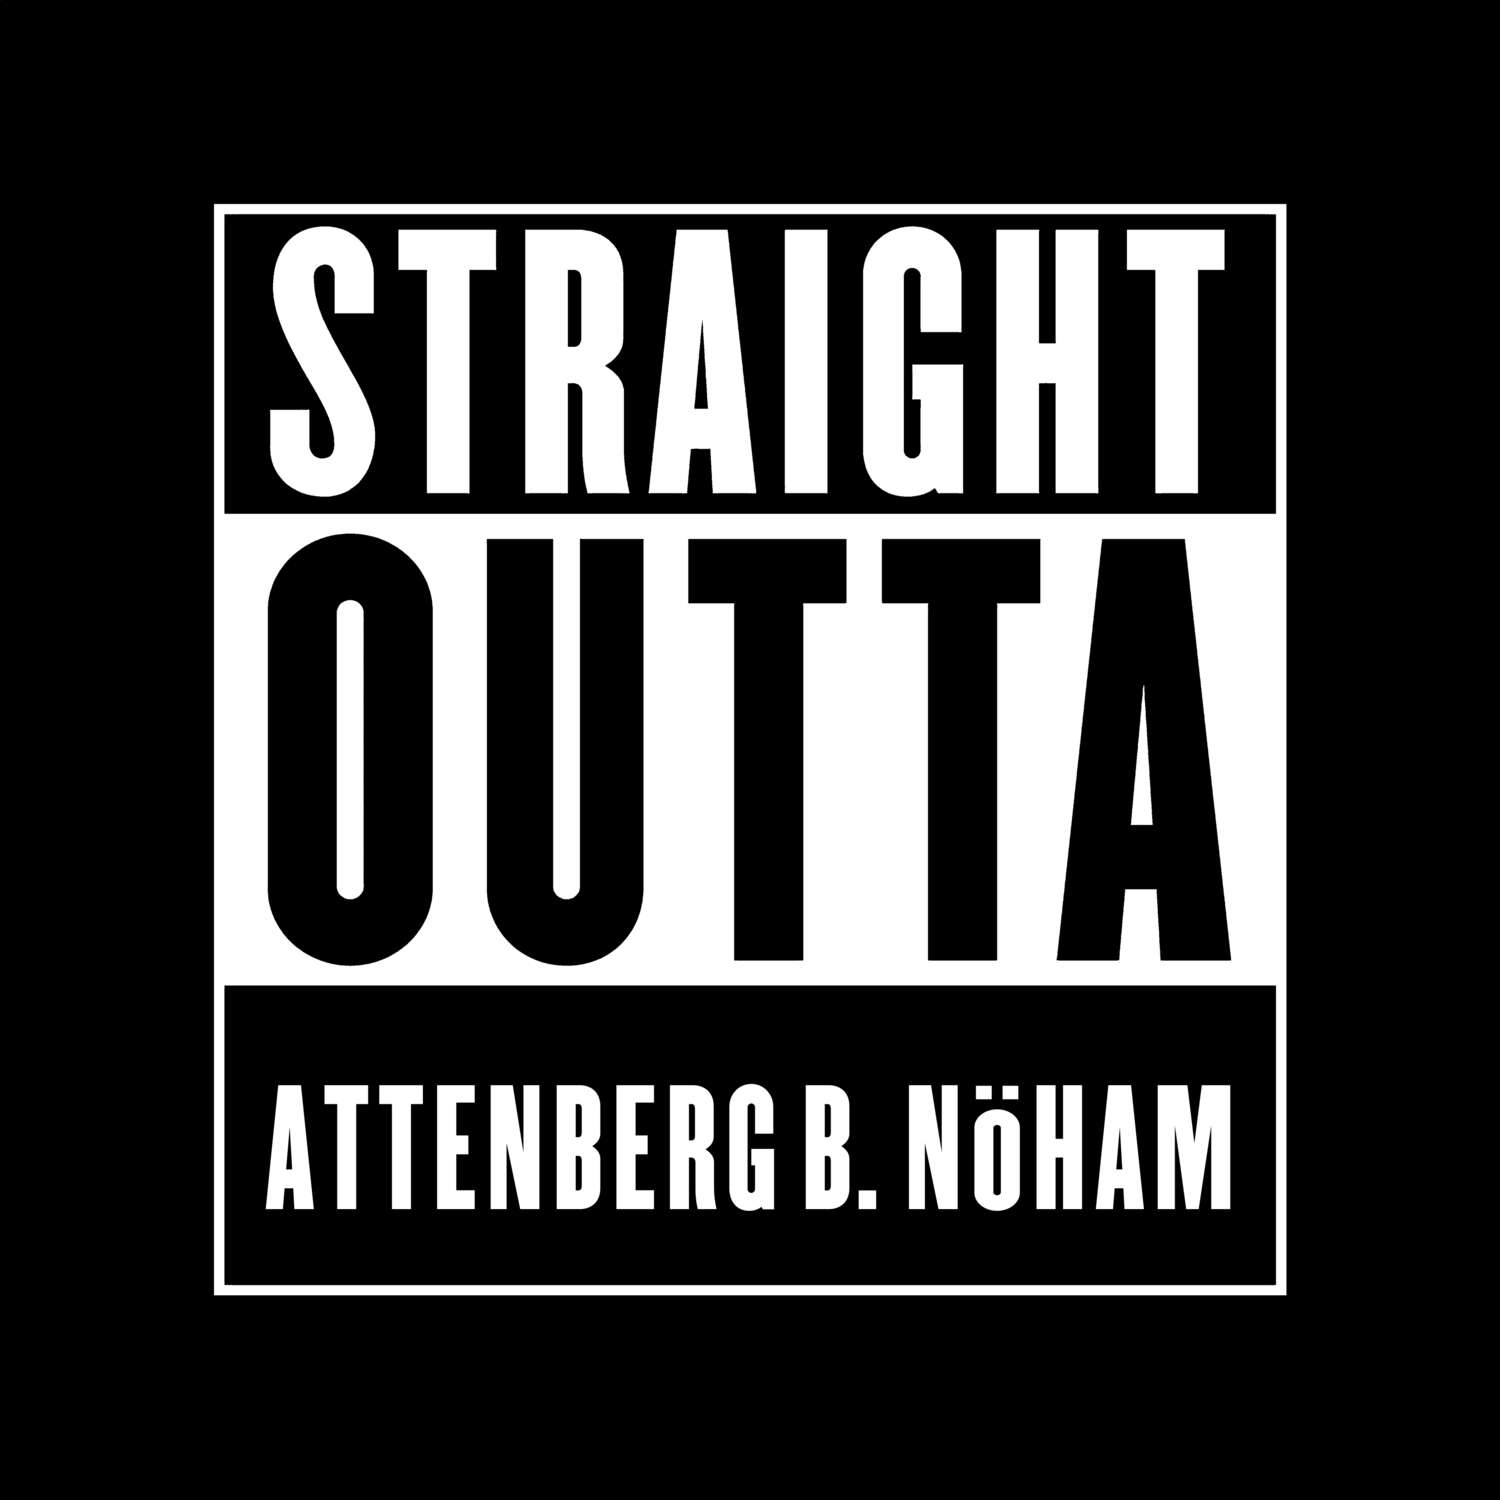 Attenberg b. Nöham T-Shirt »Straight Outta«